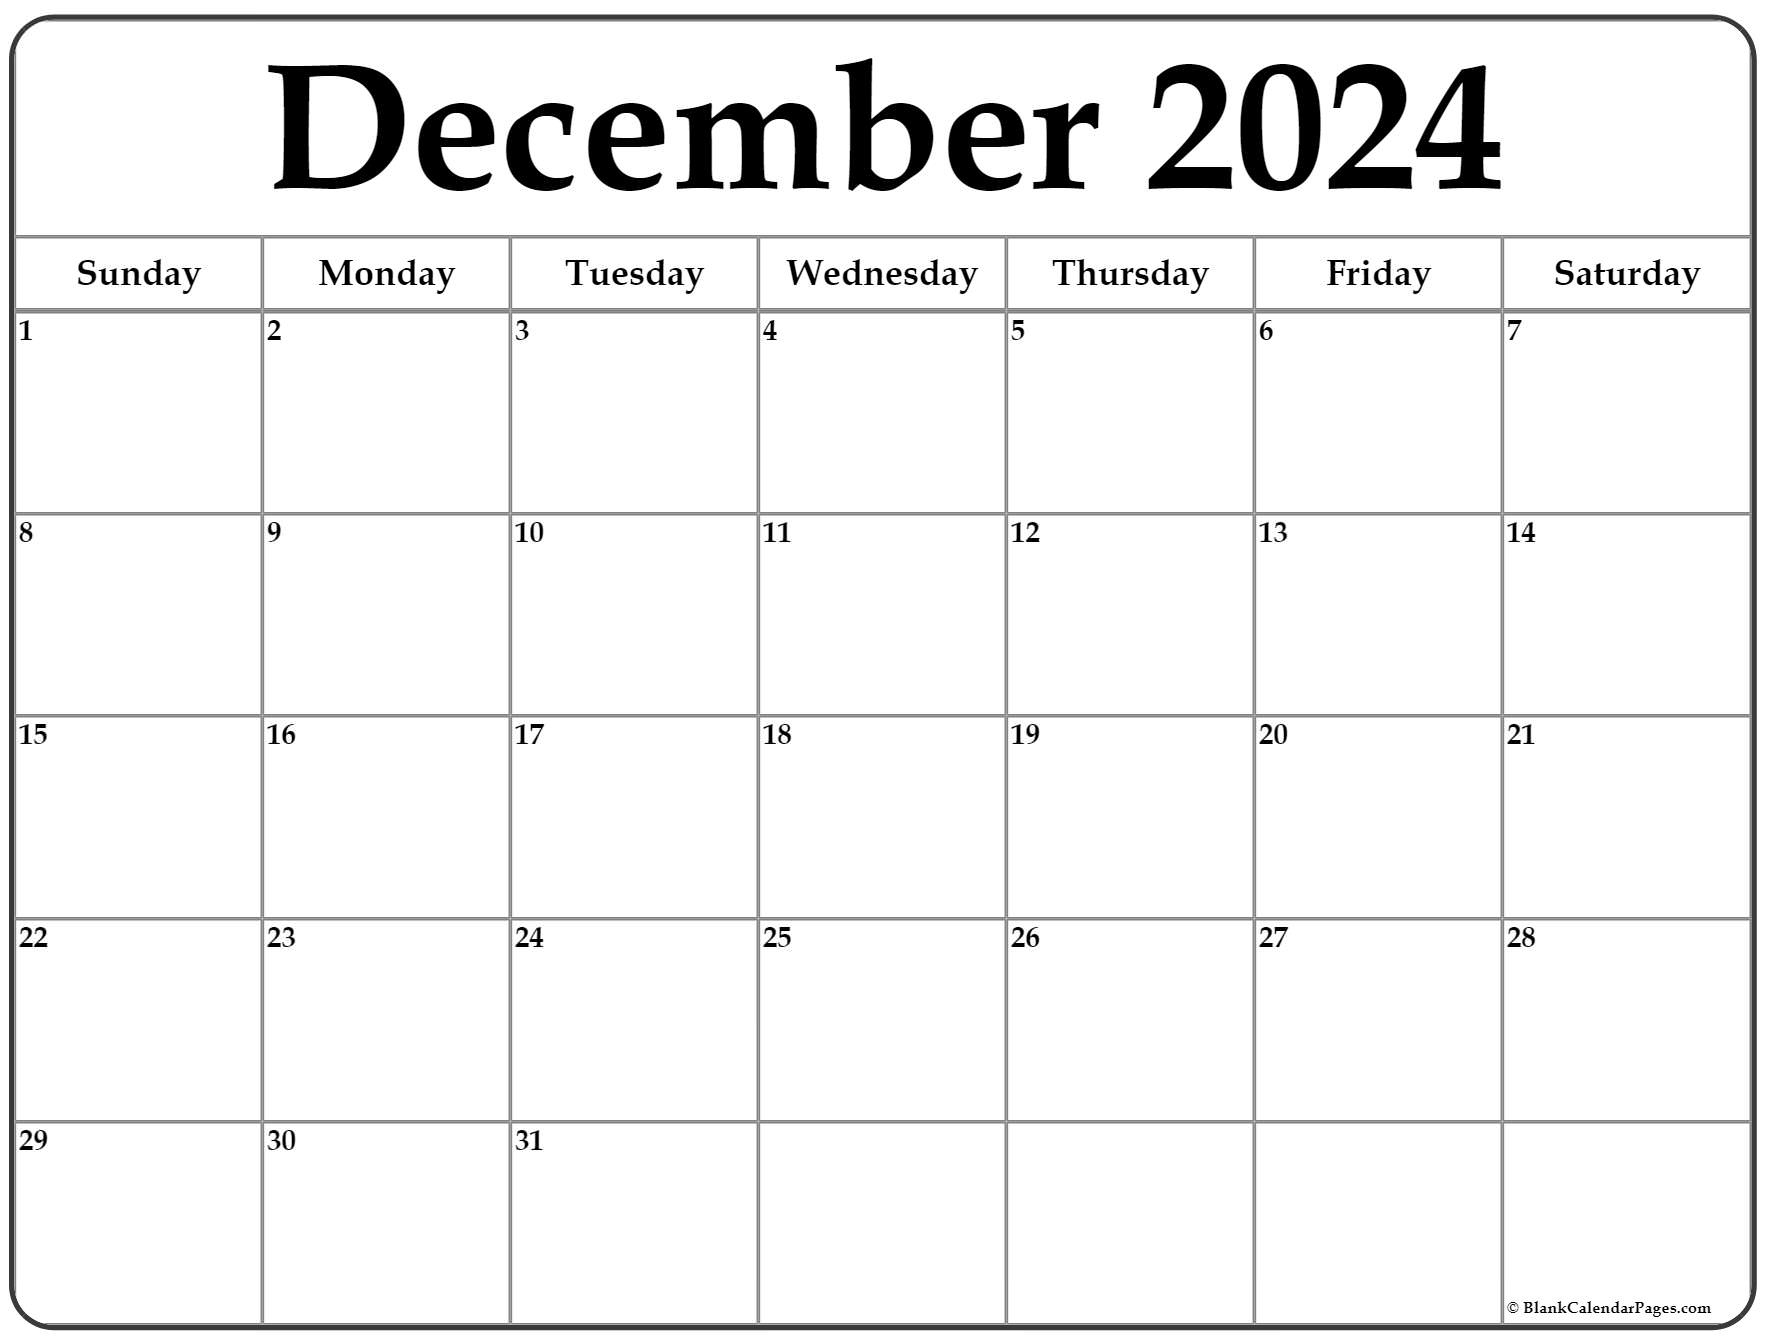 December 2024 Calendar | Free Printable Calendar intended for Free Printable Blank December Calendar 2024